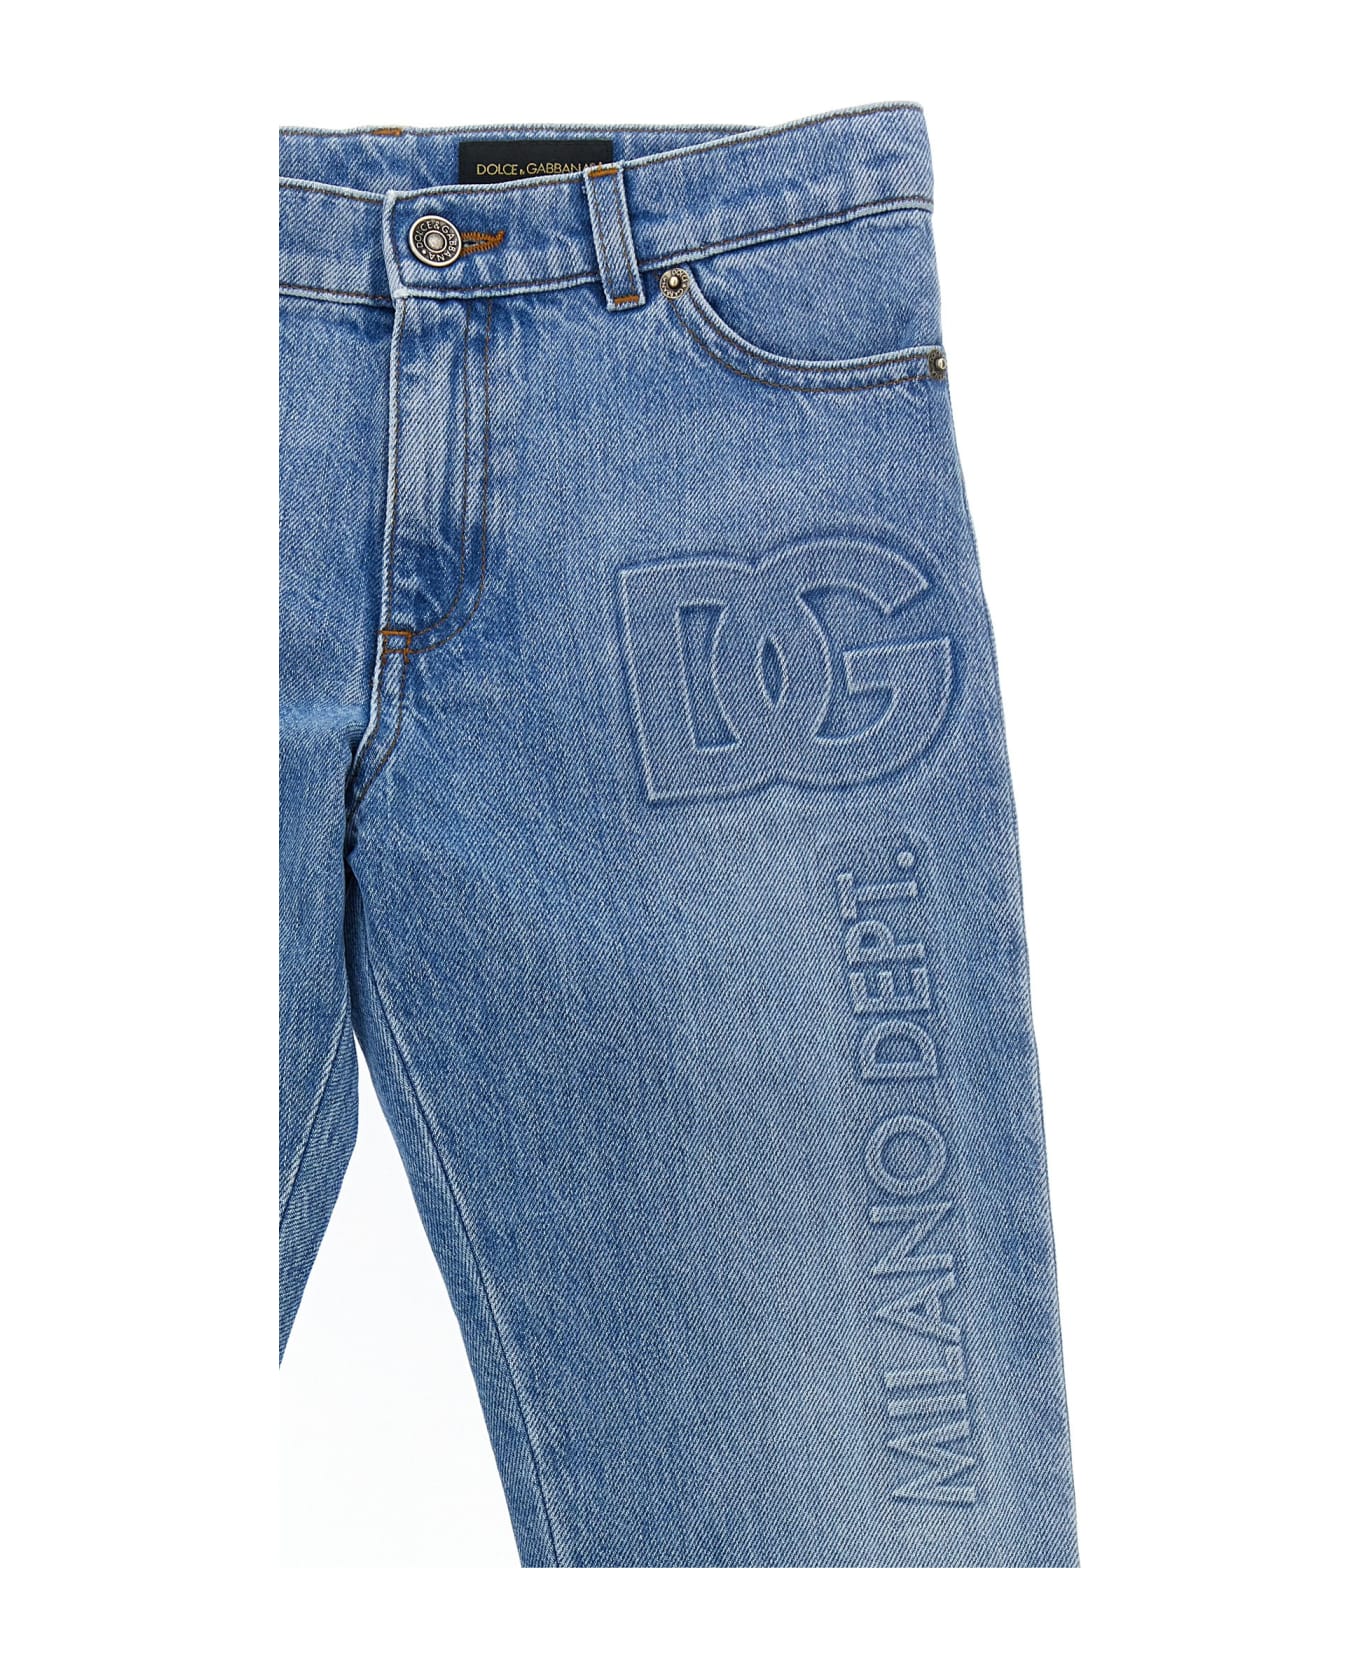 Dolce & Gabbana Logo Jeans - Light Blue ボトムス